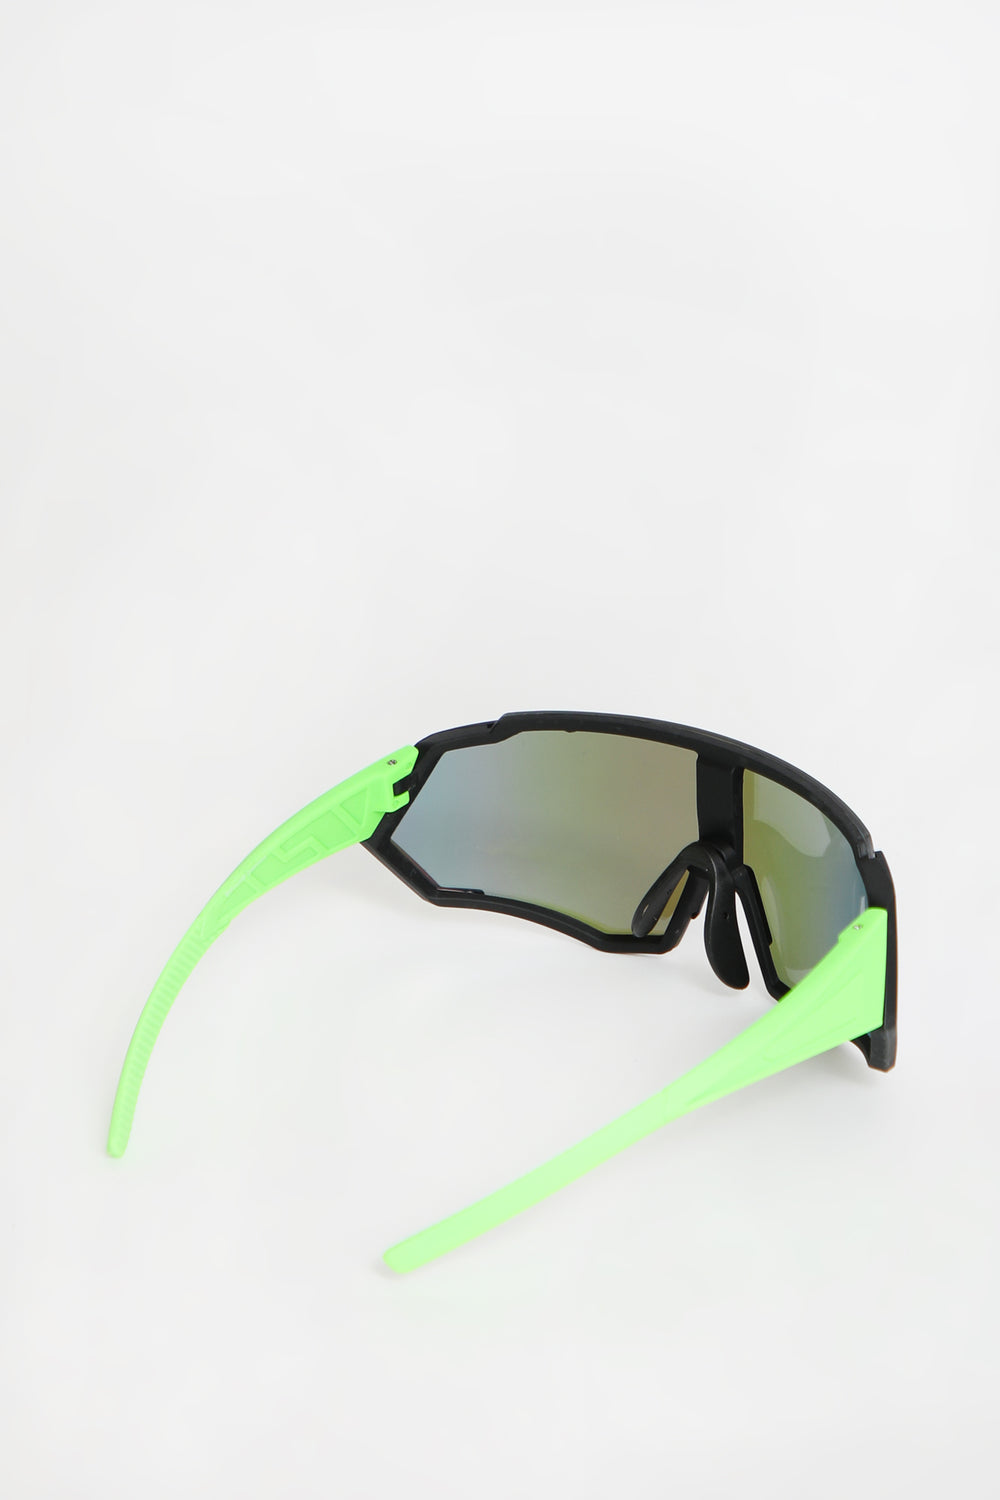 West49 Neon Shield Sunglasses West49 Neon Shield Sunglasses